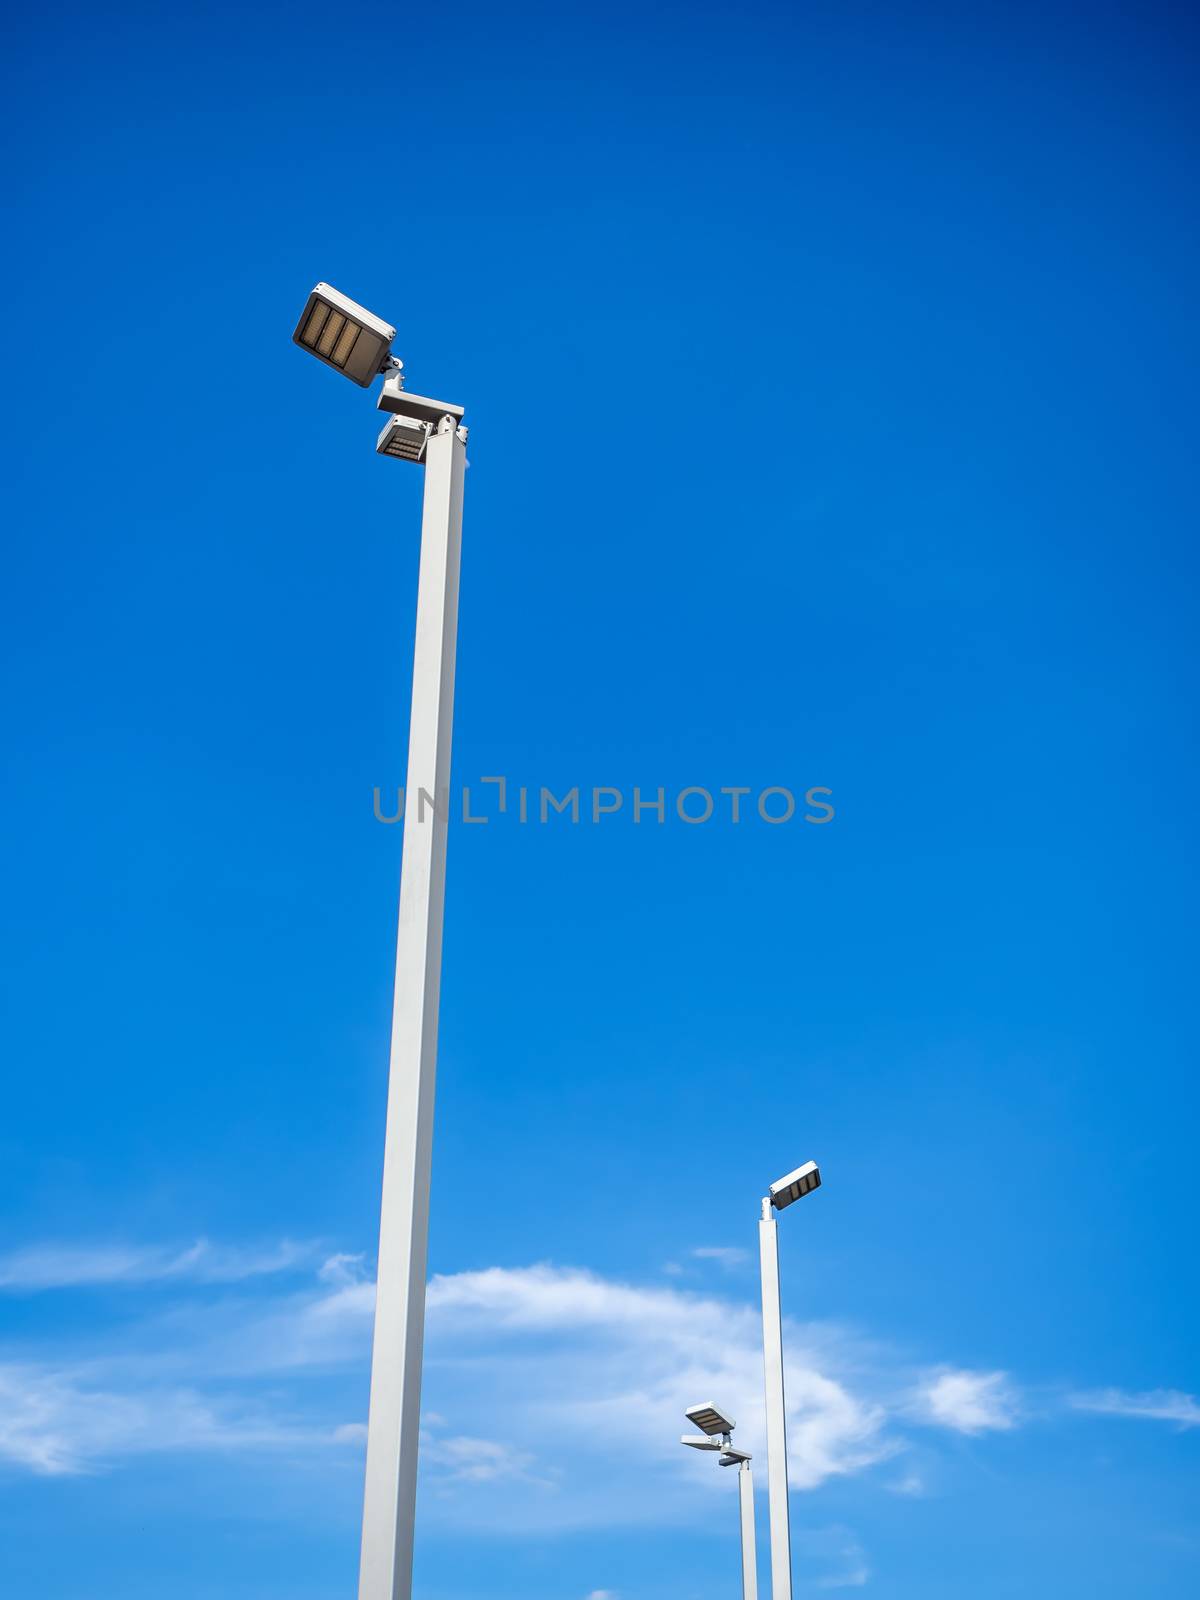 LED street lighting pole on blue sky background. by tete_escape